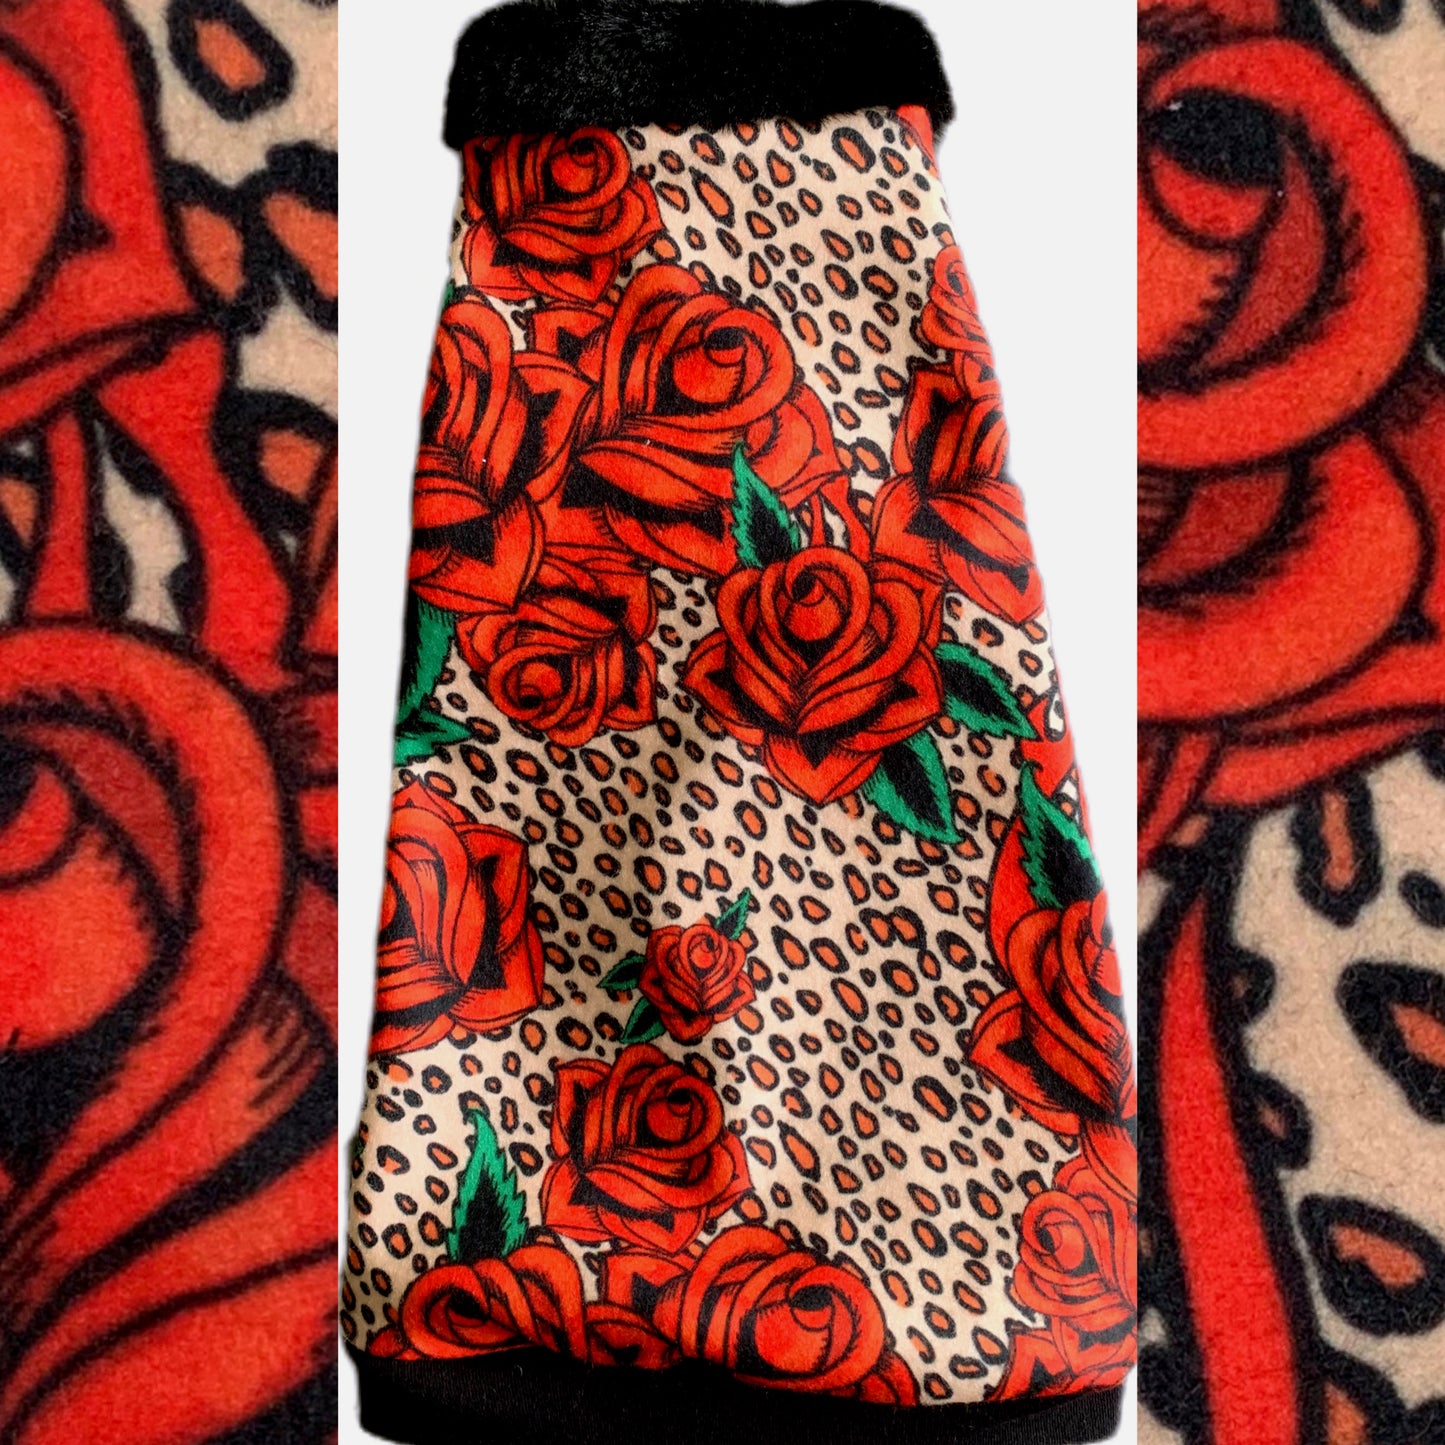 Tattoo Roses on Leopard Fleece w/Fur Collar "Love Blooms"